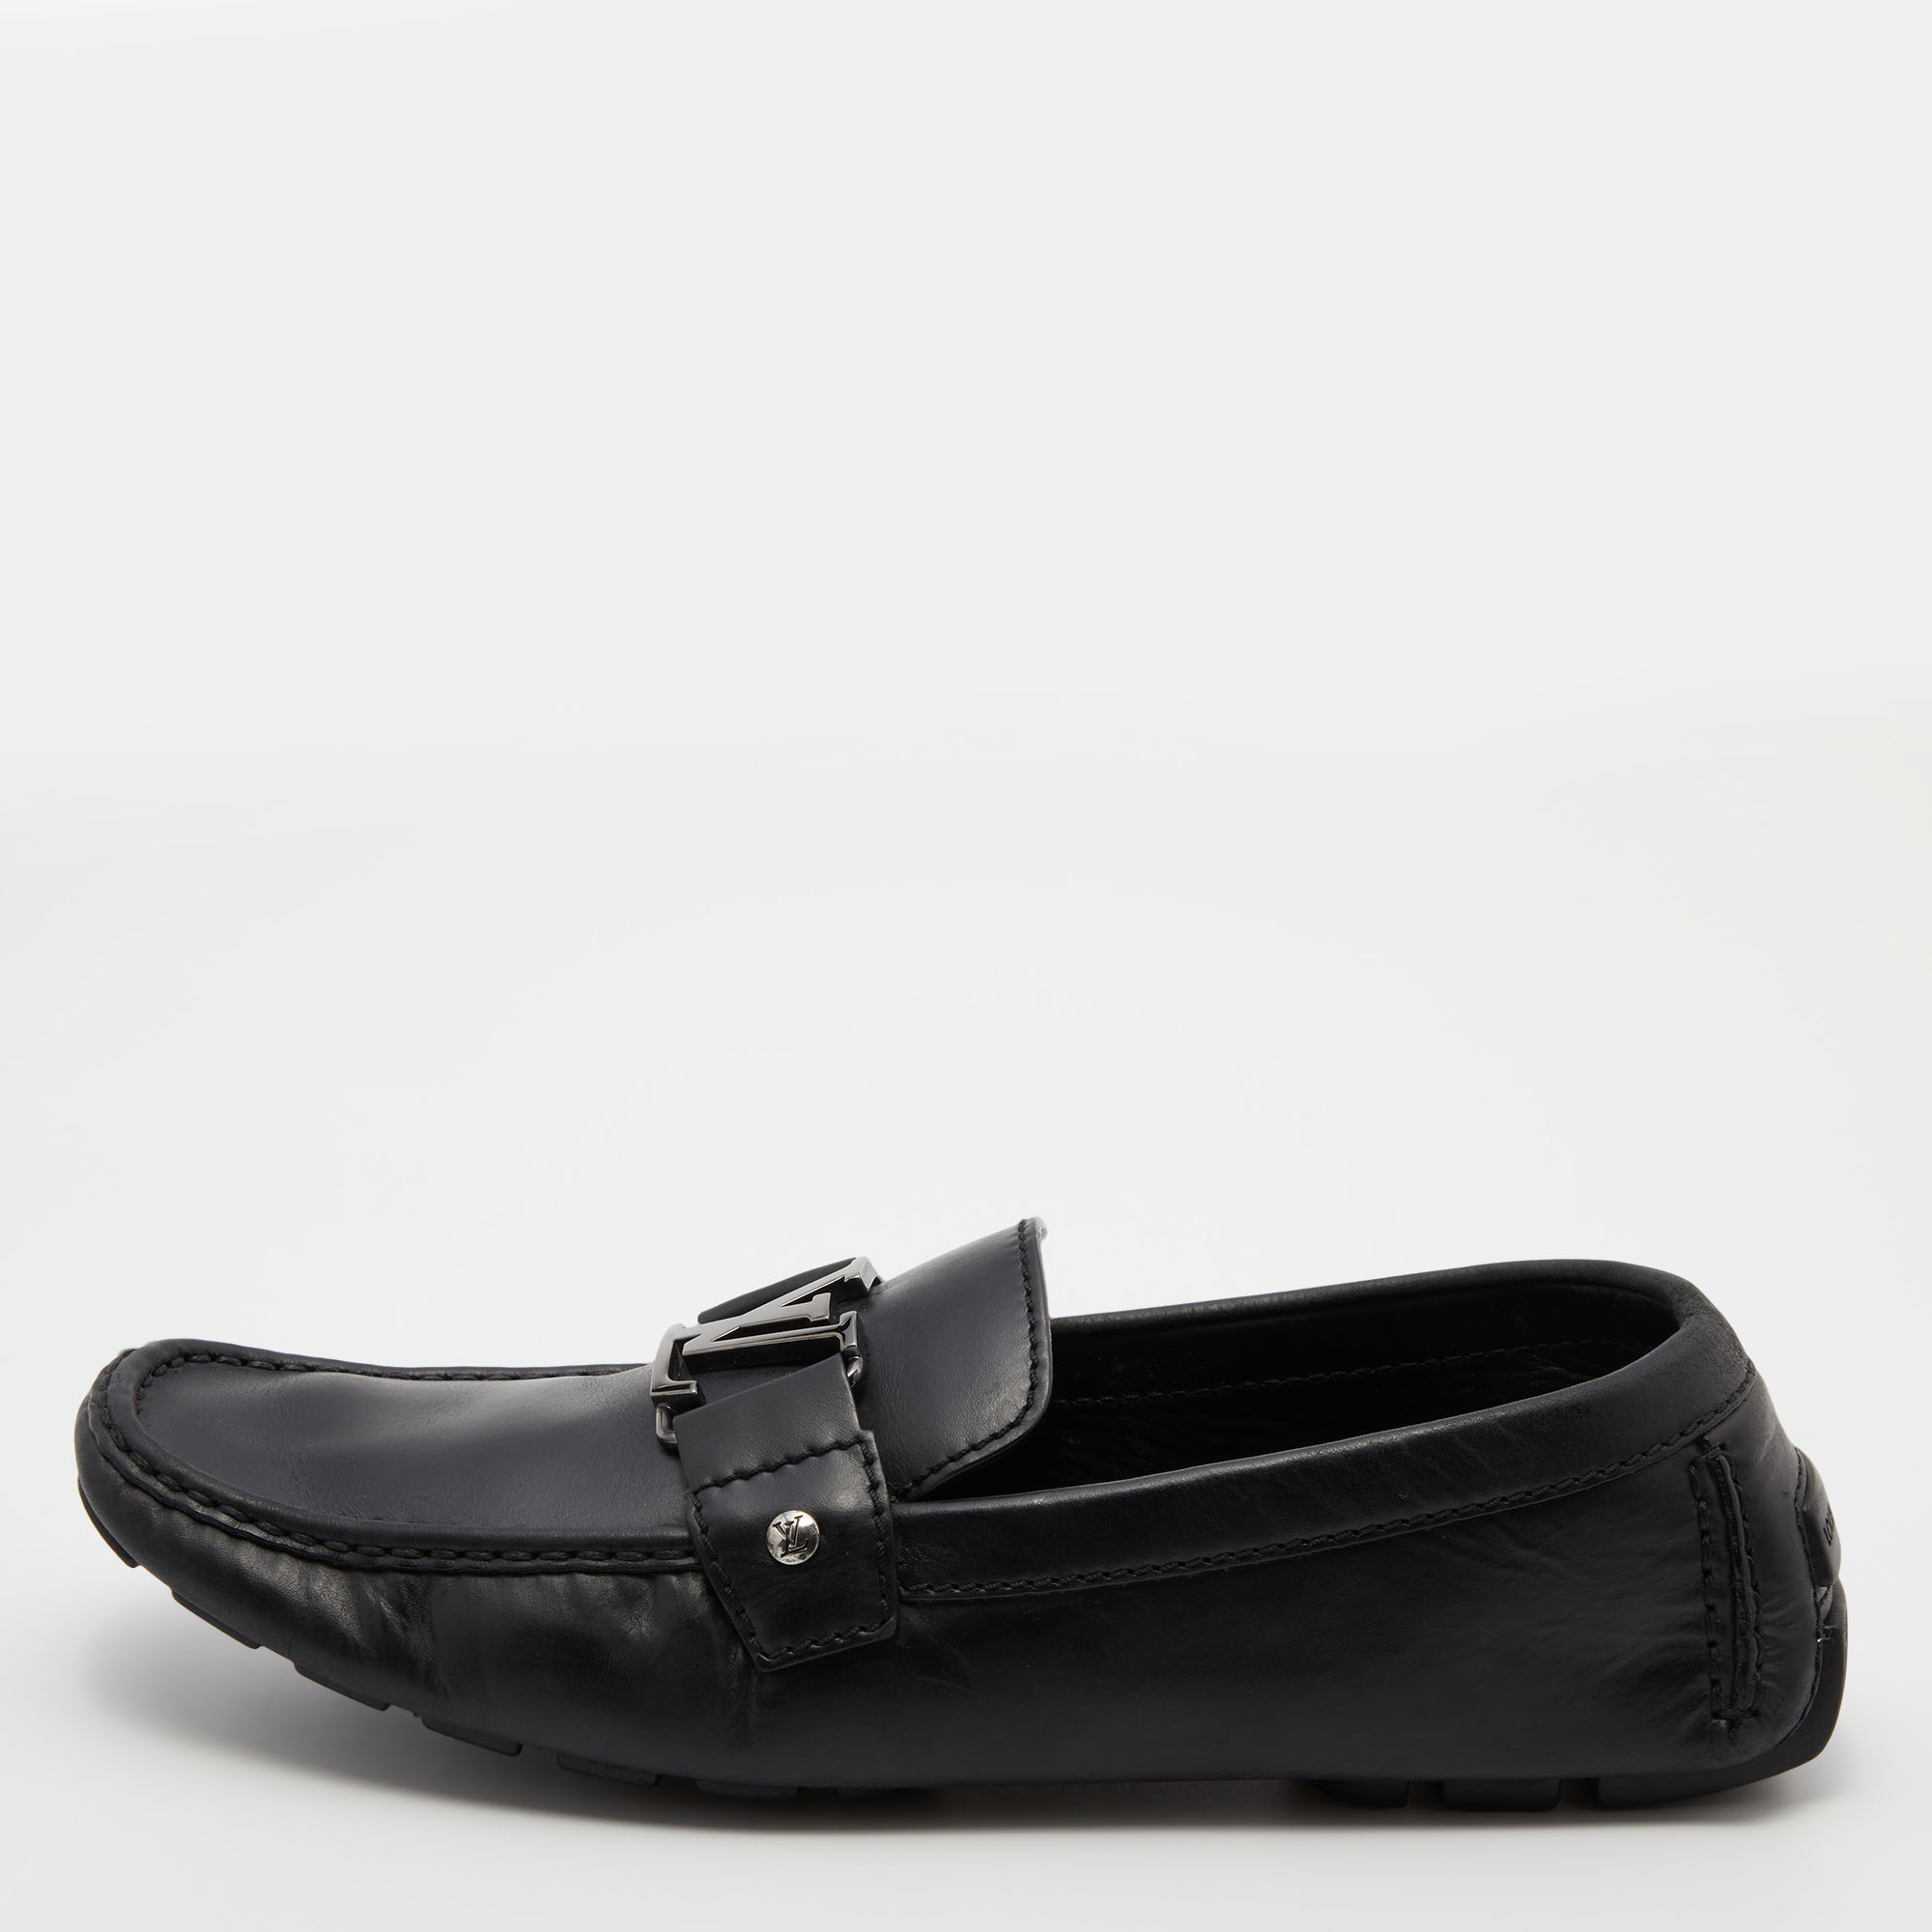 Louis Vuitton Black Leather Low Top Sneakers Size 42.5 Louis